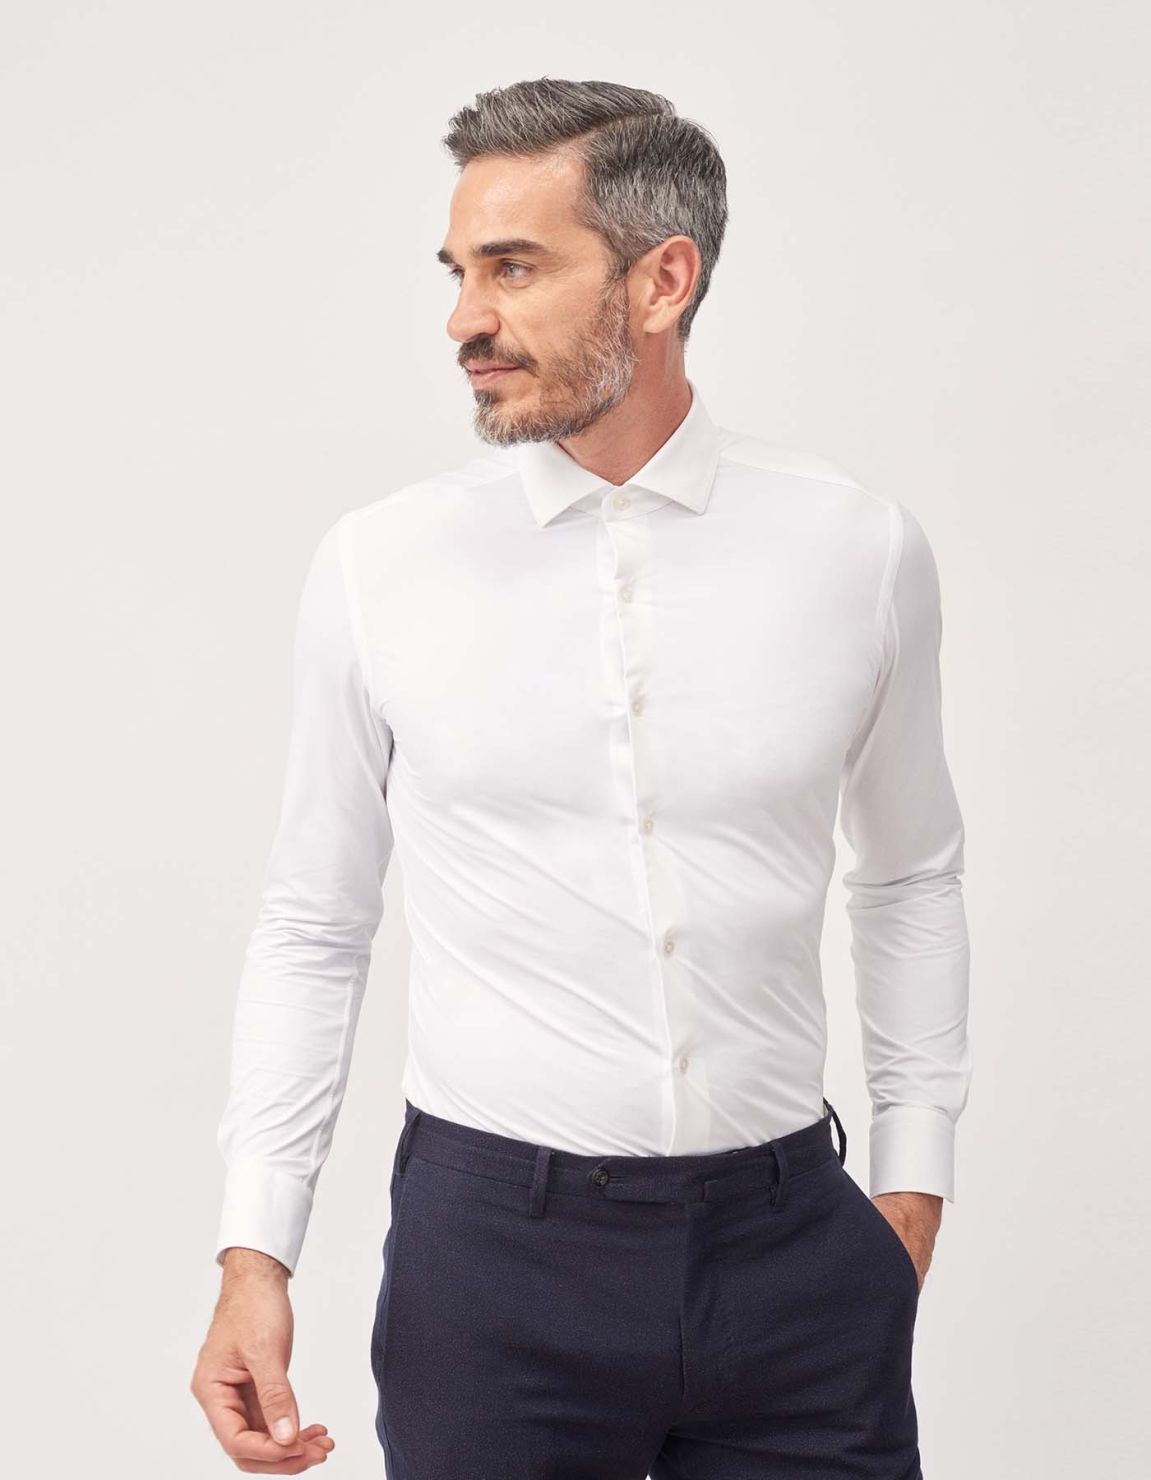 Shirt Collar small cutaway White Twill Slim Fit 5